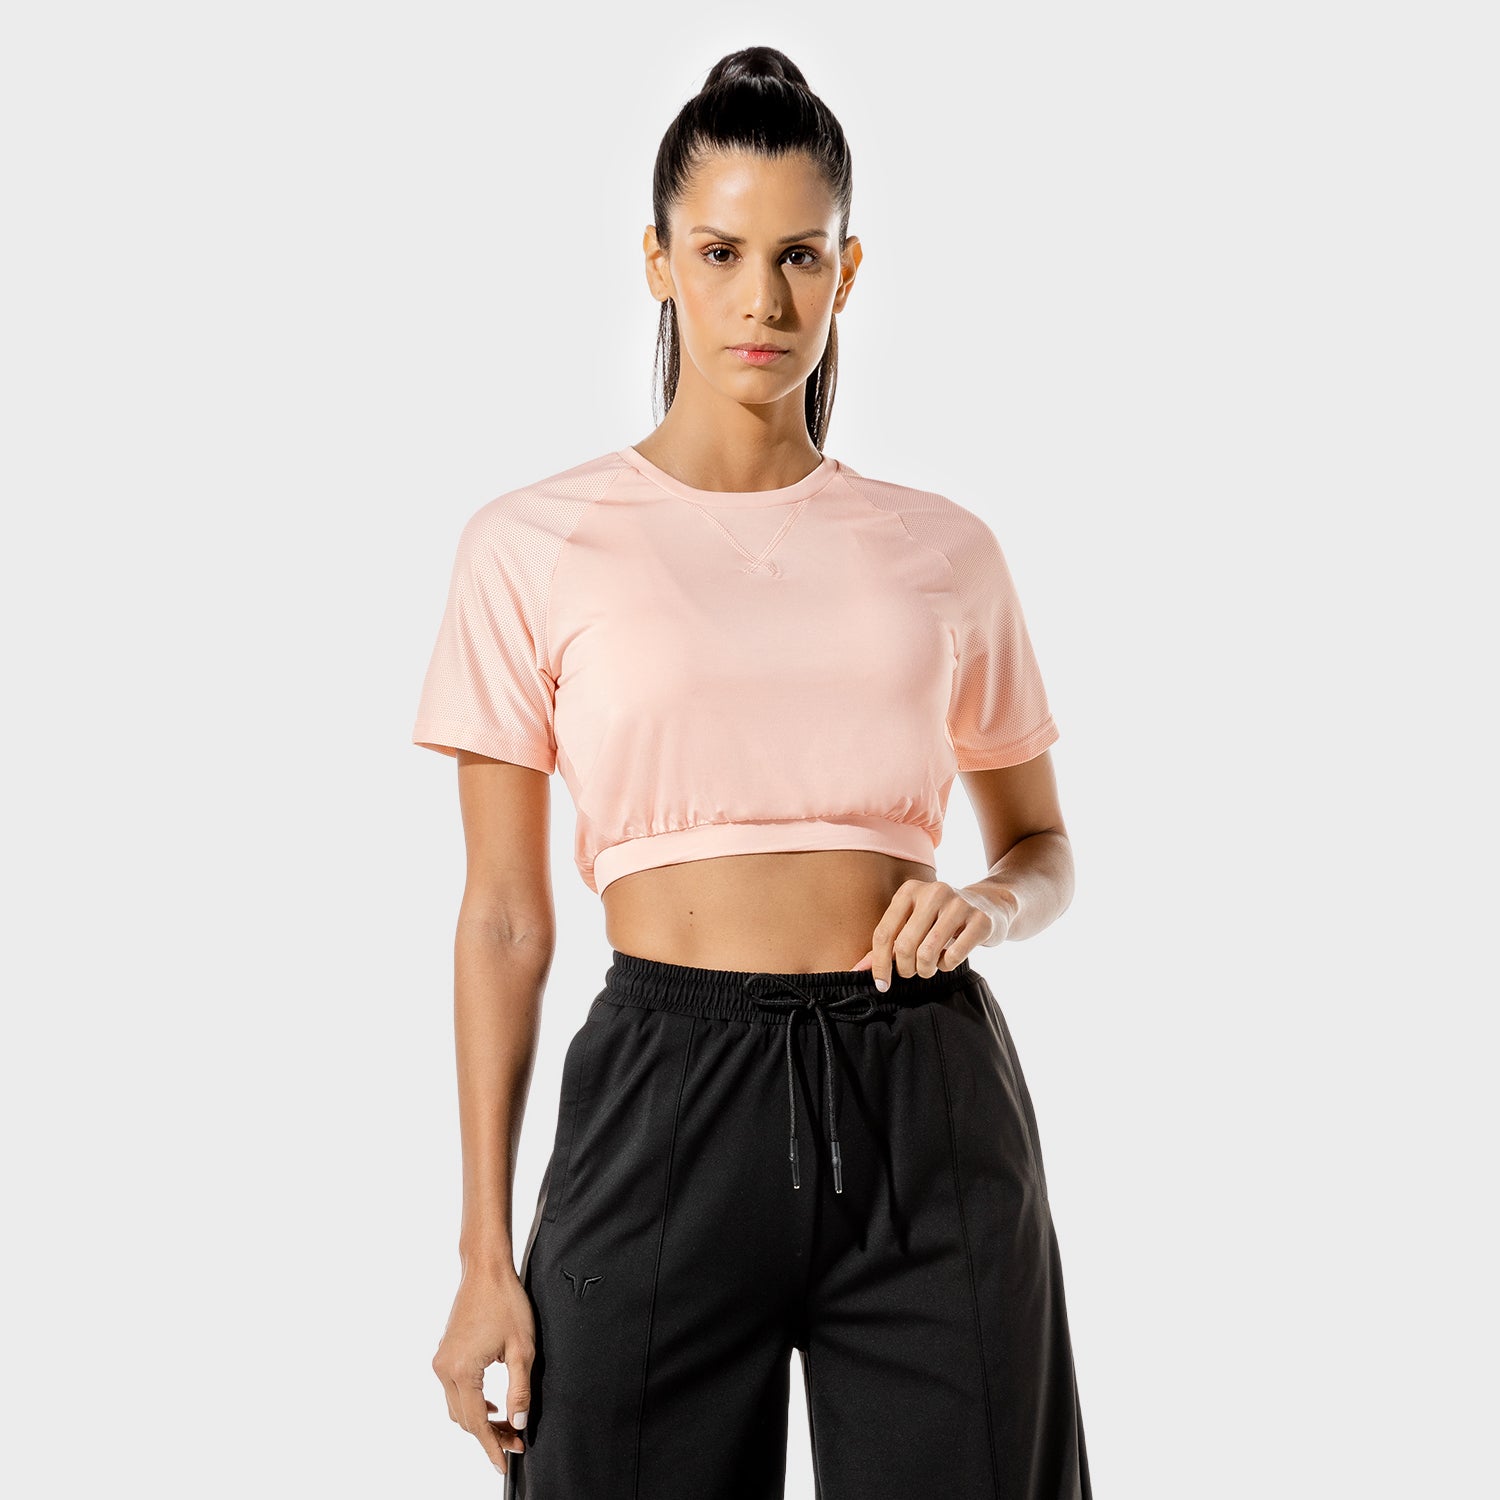 squatwolf-gym-wear-womens-fitness-crop-top-pink-workout-shirts